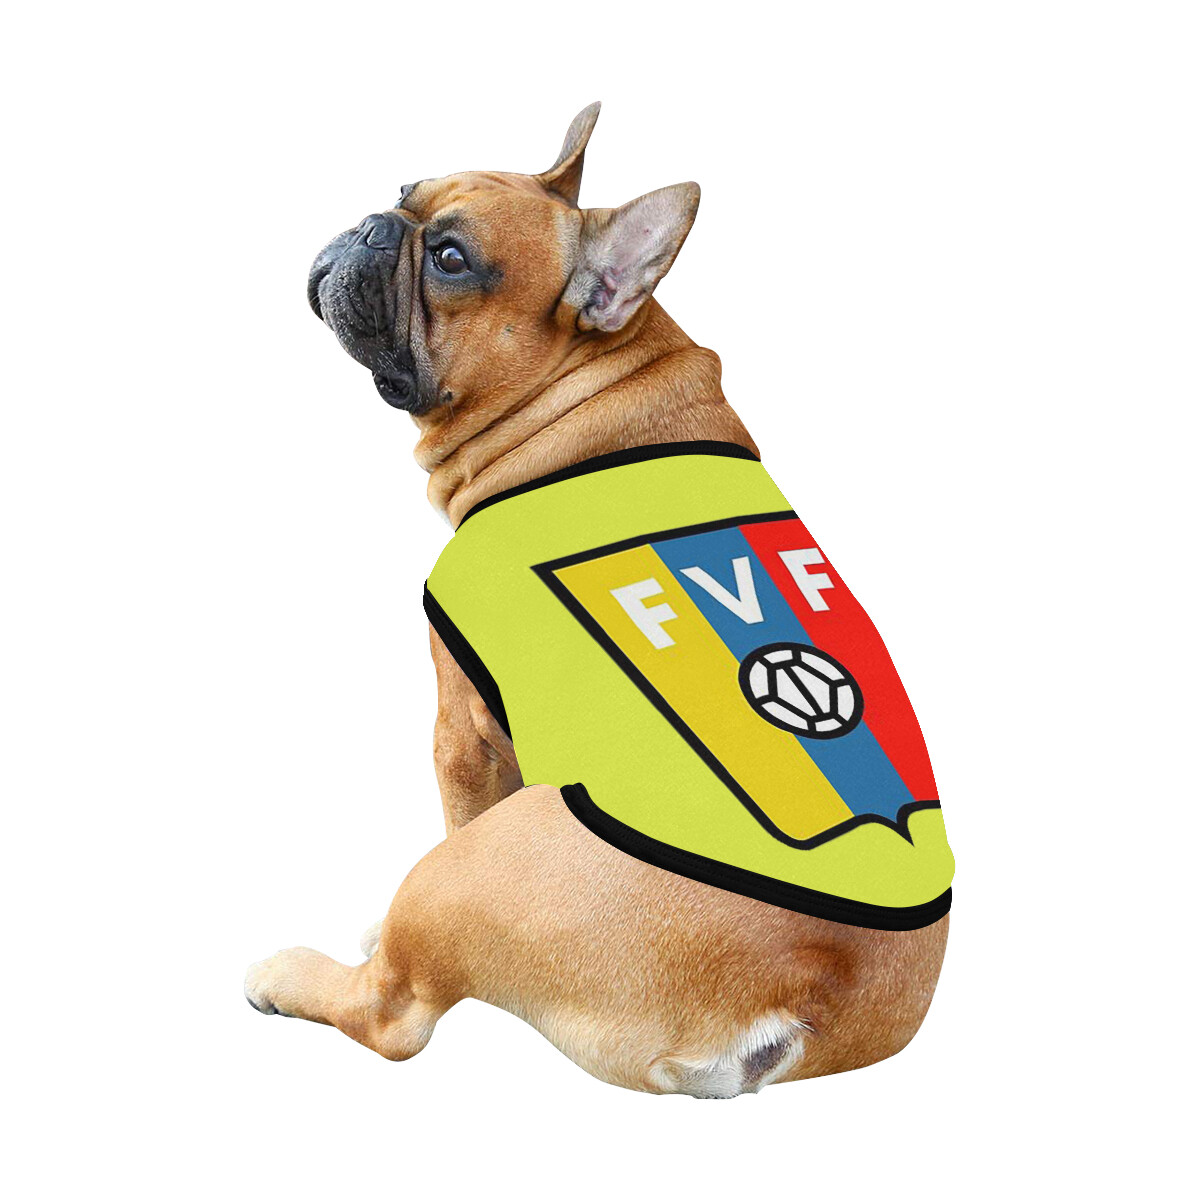 🐕🇻🇪 ⚽️ Vinotinto, Venezuela soccer team, Dog t-shirt, Dog Tank Top, Dog shirt, Dog clothes, Dog jersey, Gift, 7 sizes XS to 3XL, Venezuelan, I love sports, yellow